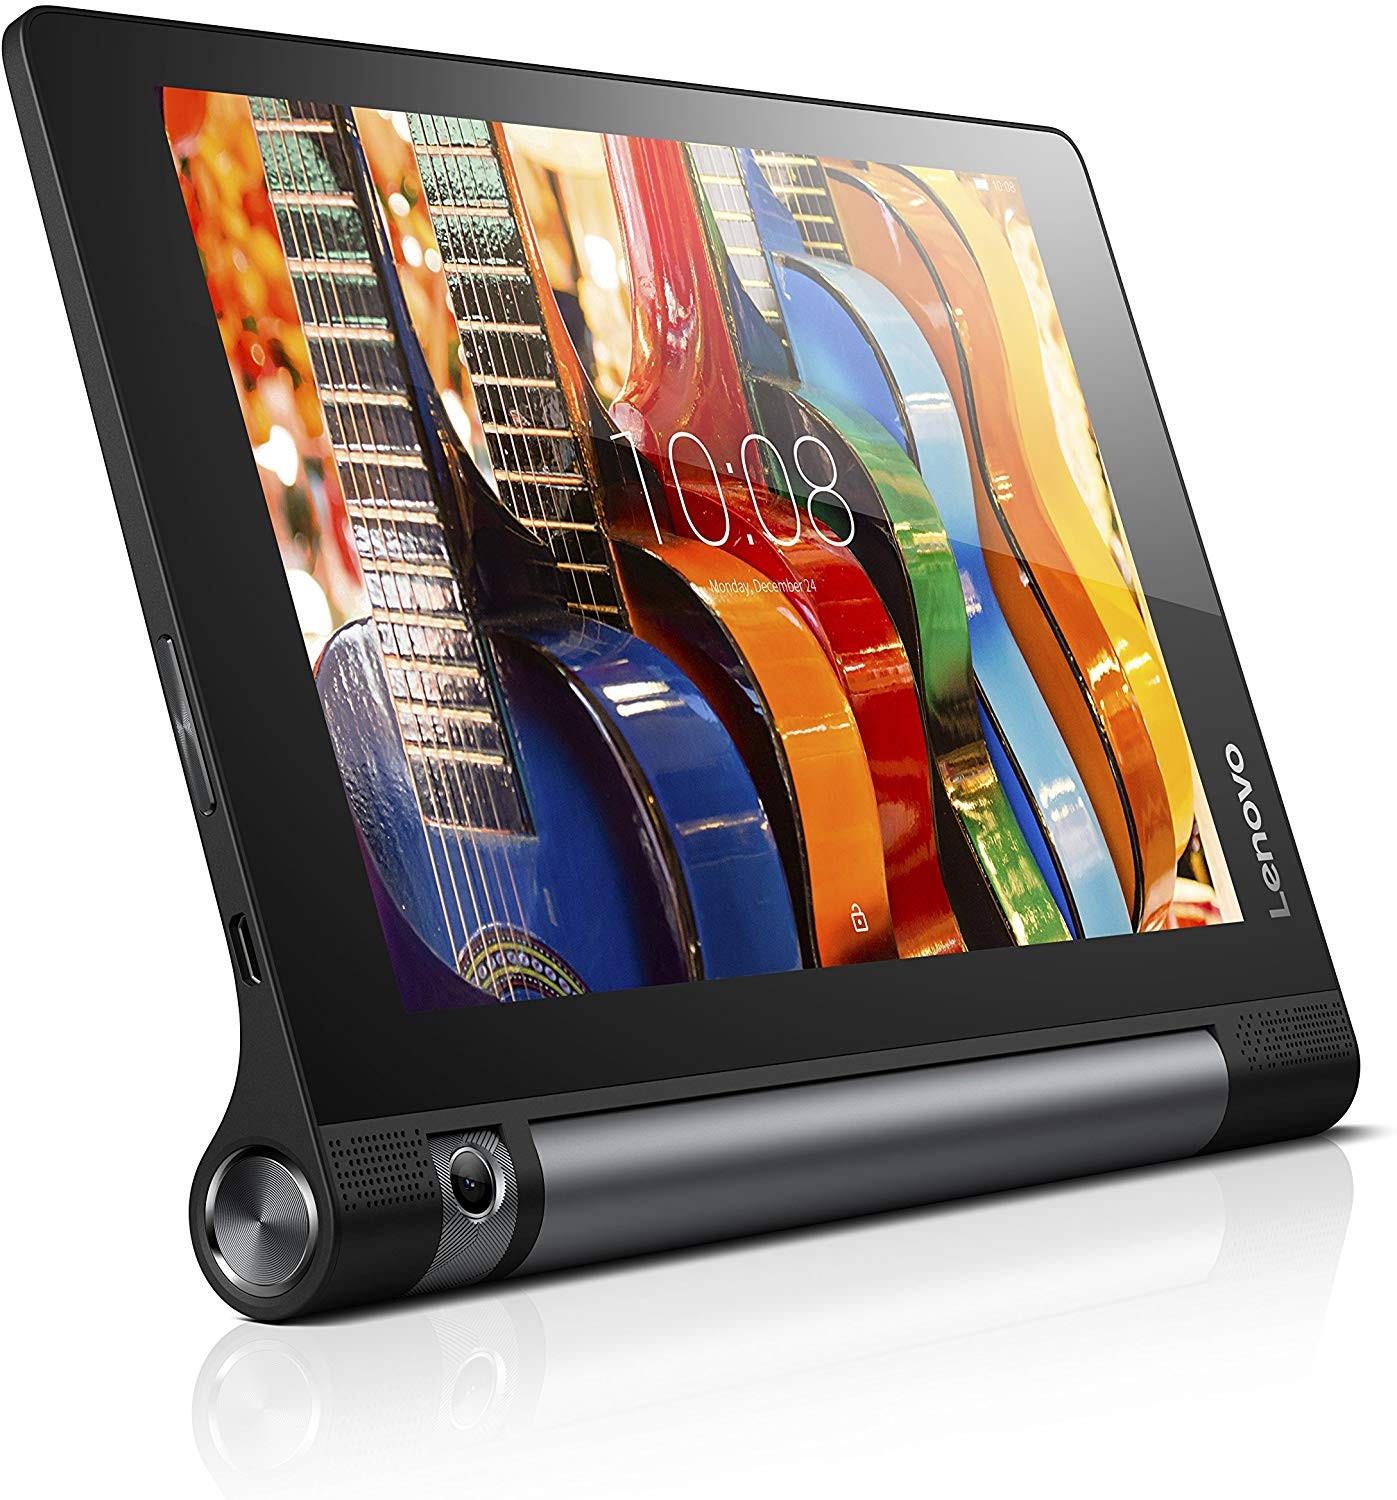 Lenovo Yoga Tab 3 8" IPS 1280x800 APQ8009 1.3GHz 2GB 16GB Android 5.1 Tablet